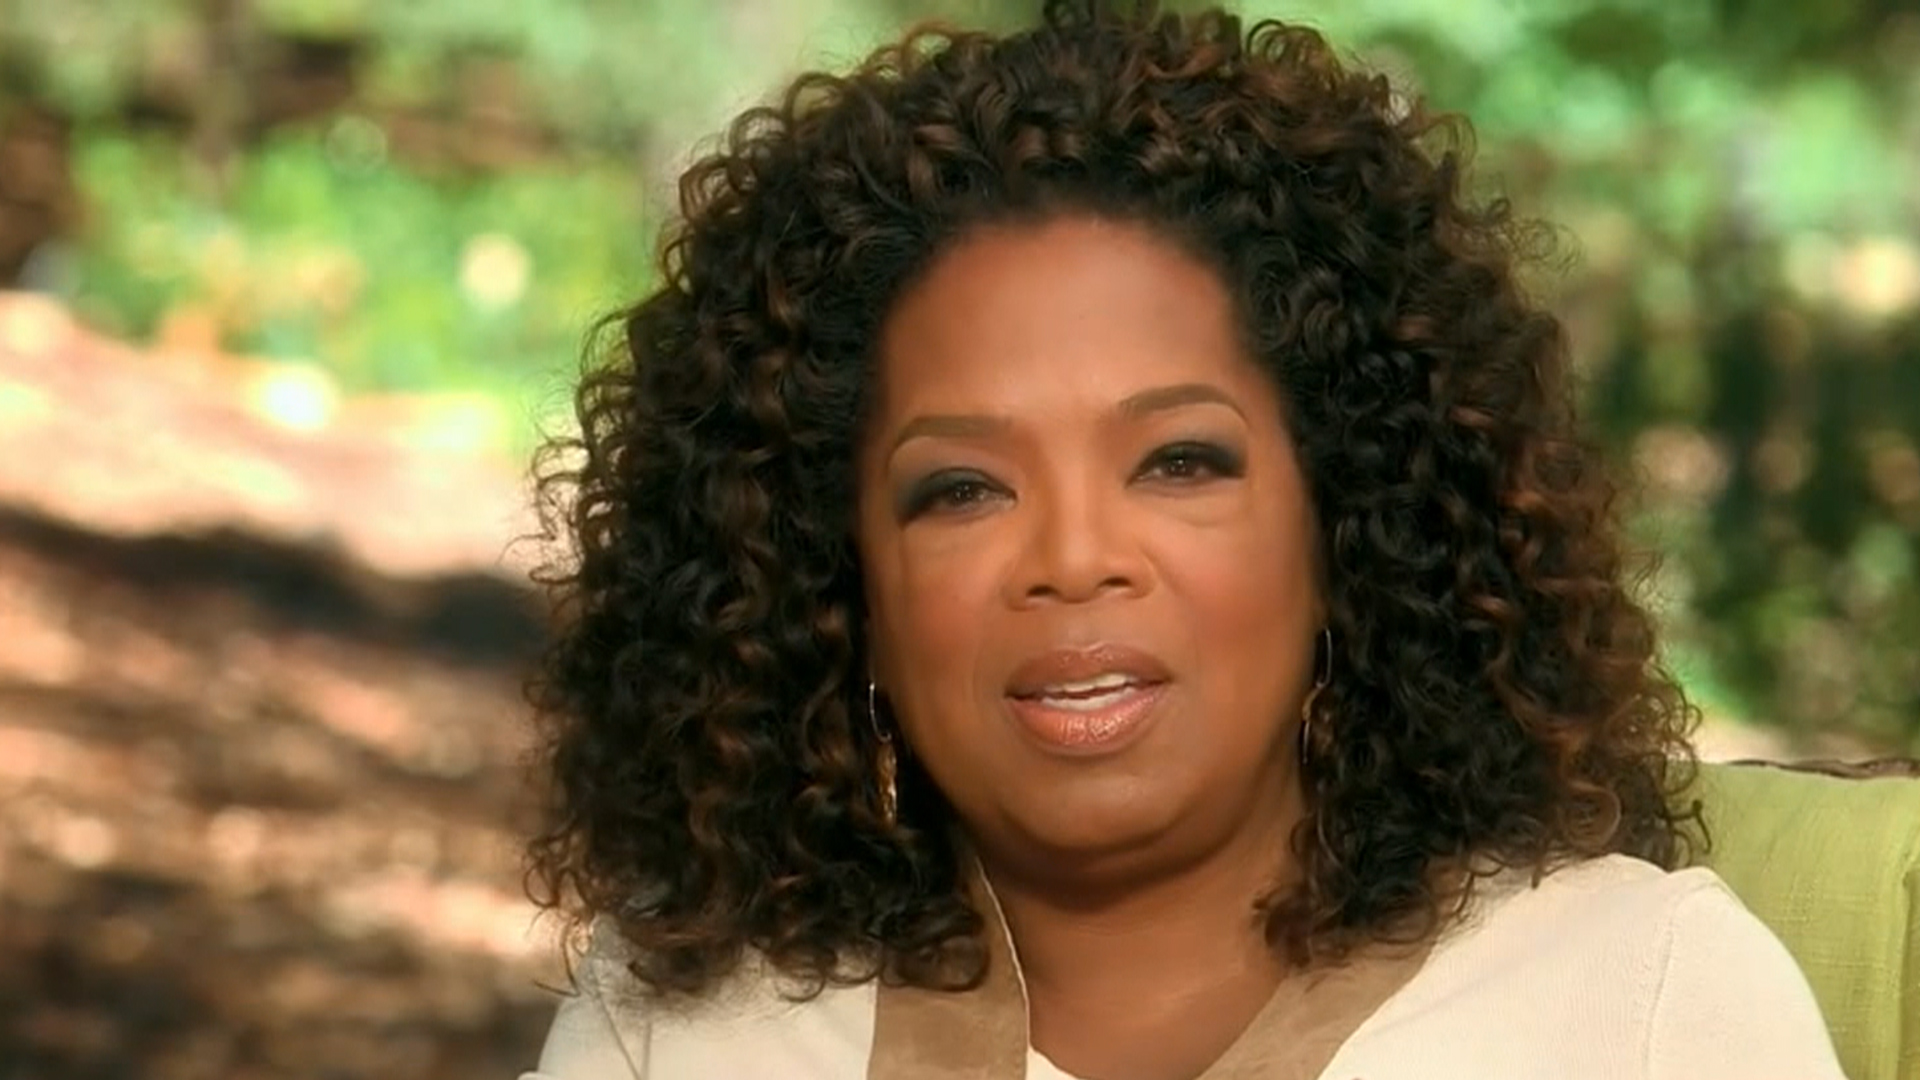 Oprah Winfrey shares weight struggles in new Weight Watchers ad image